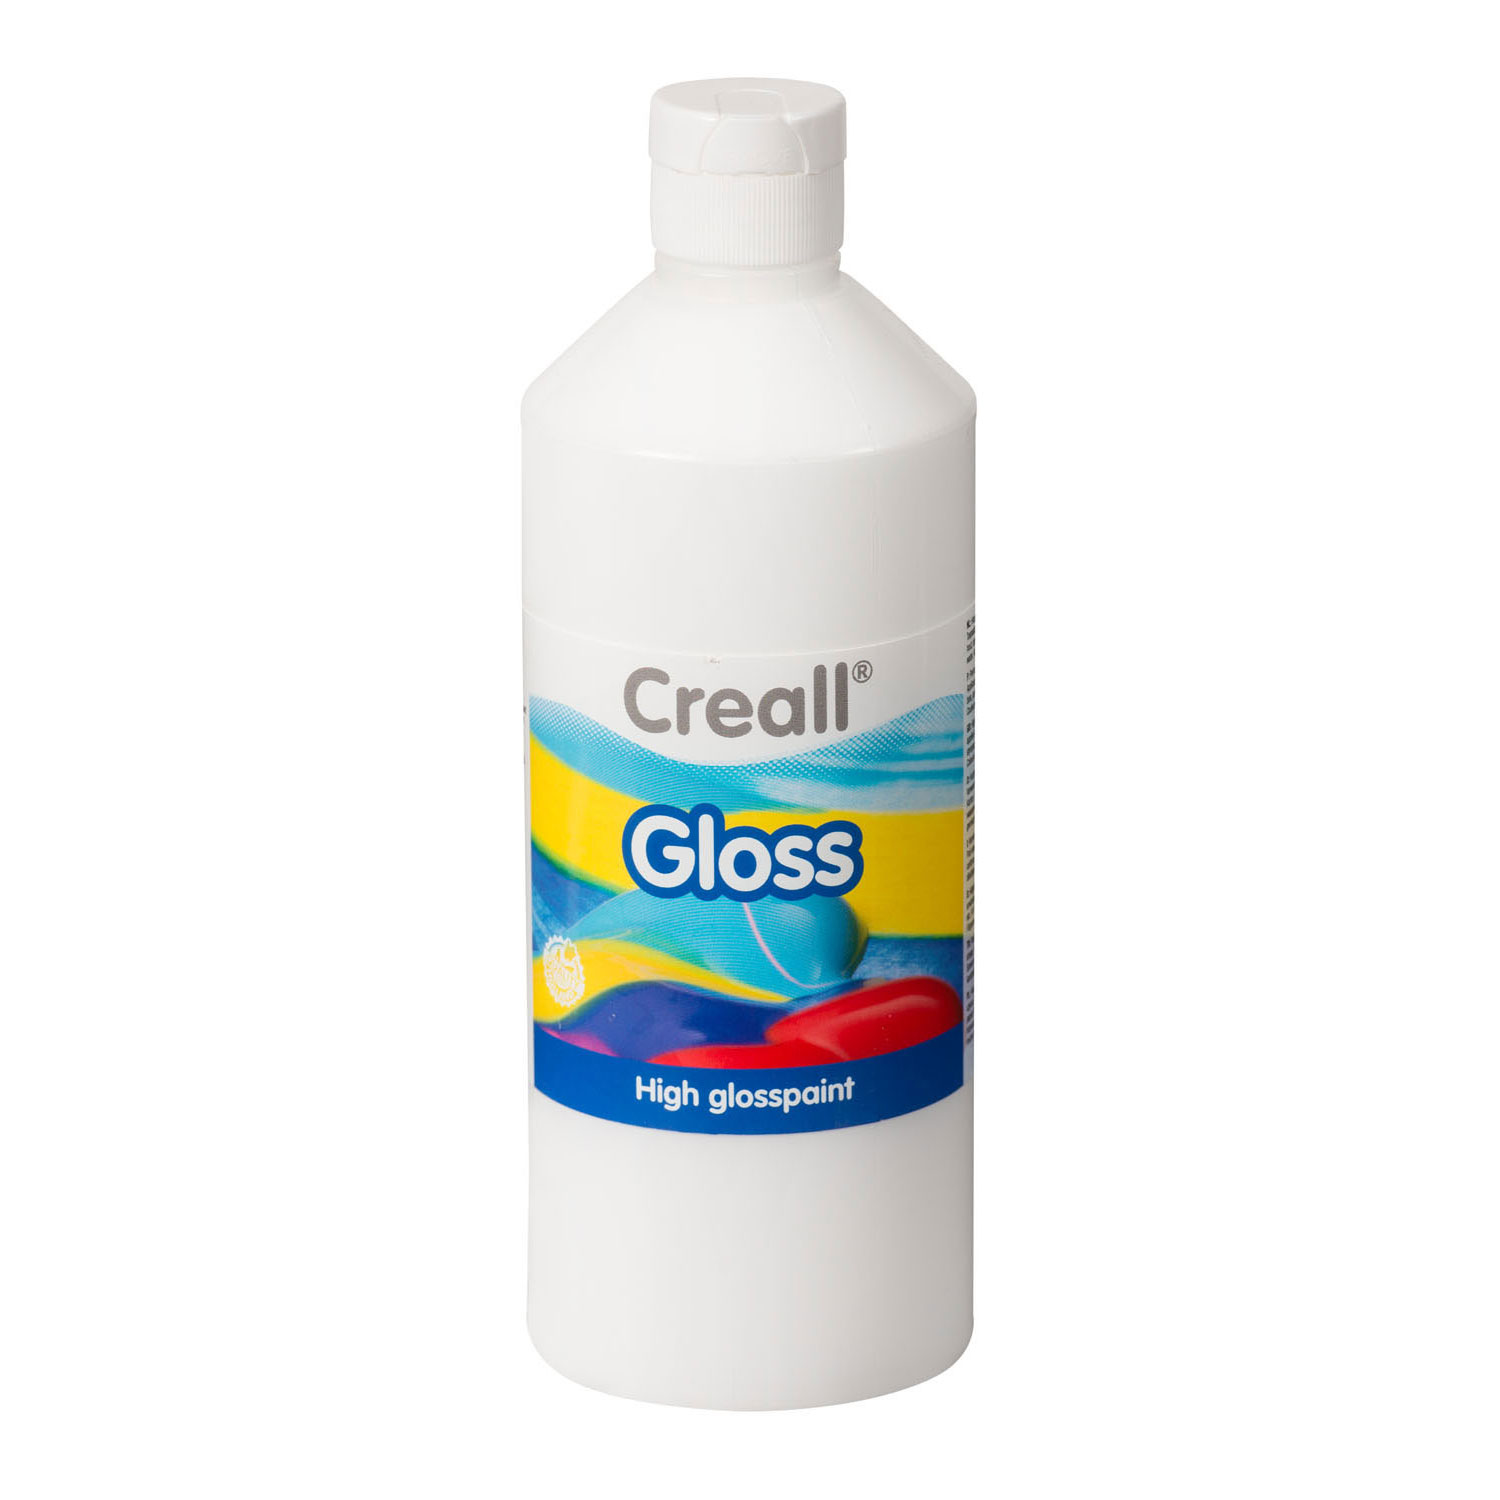 Creall Gloss Peinture Brillante Blanc, 500 ml